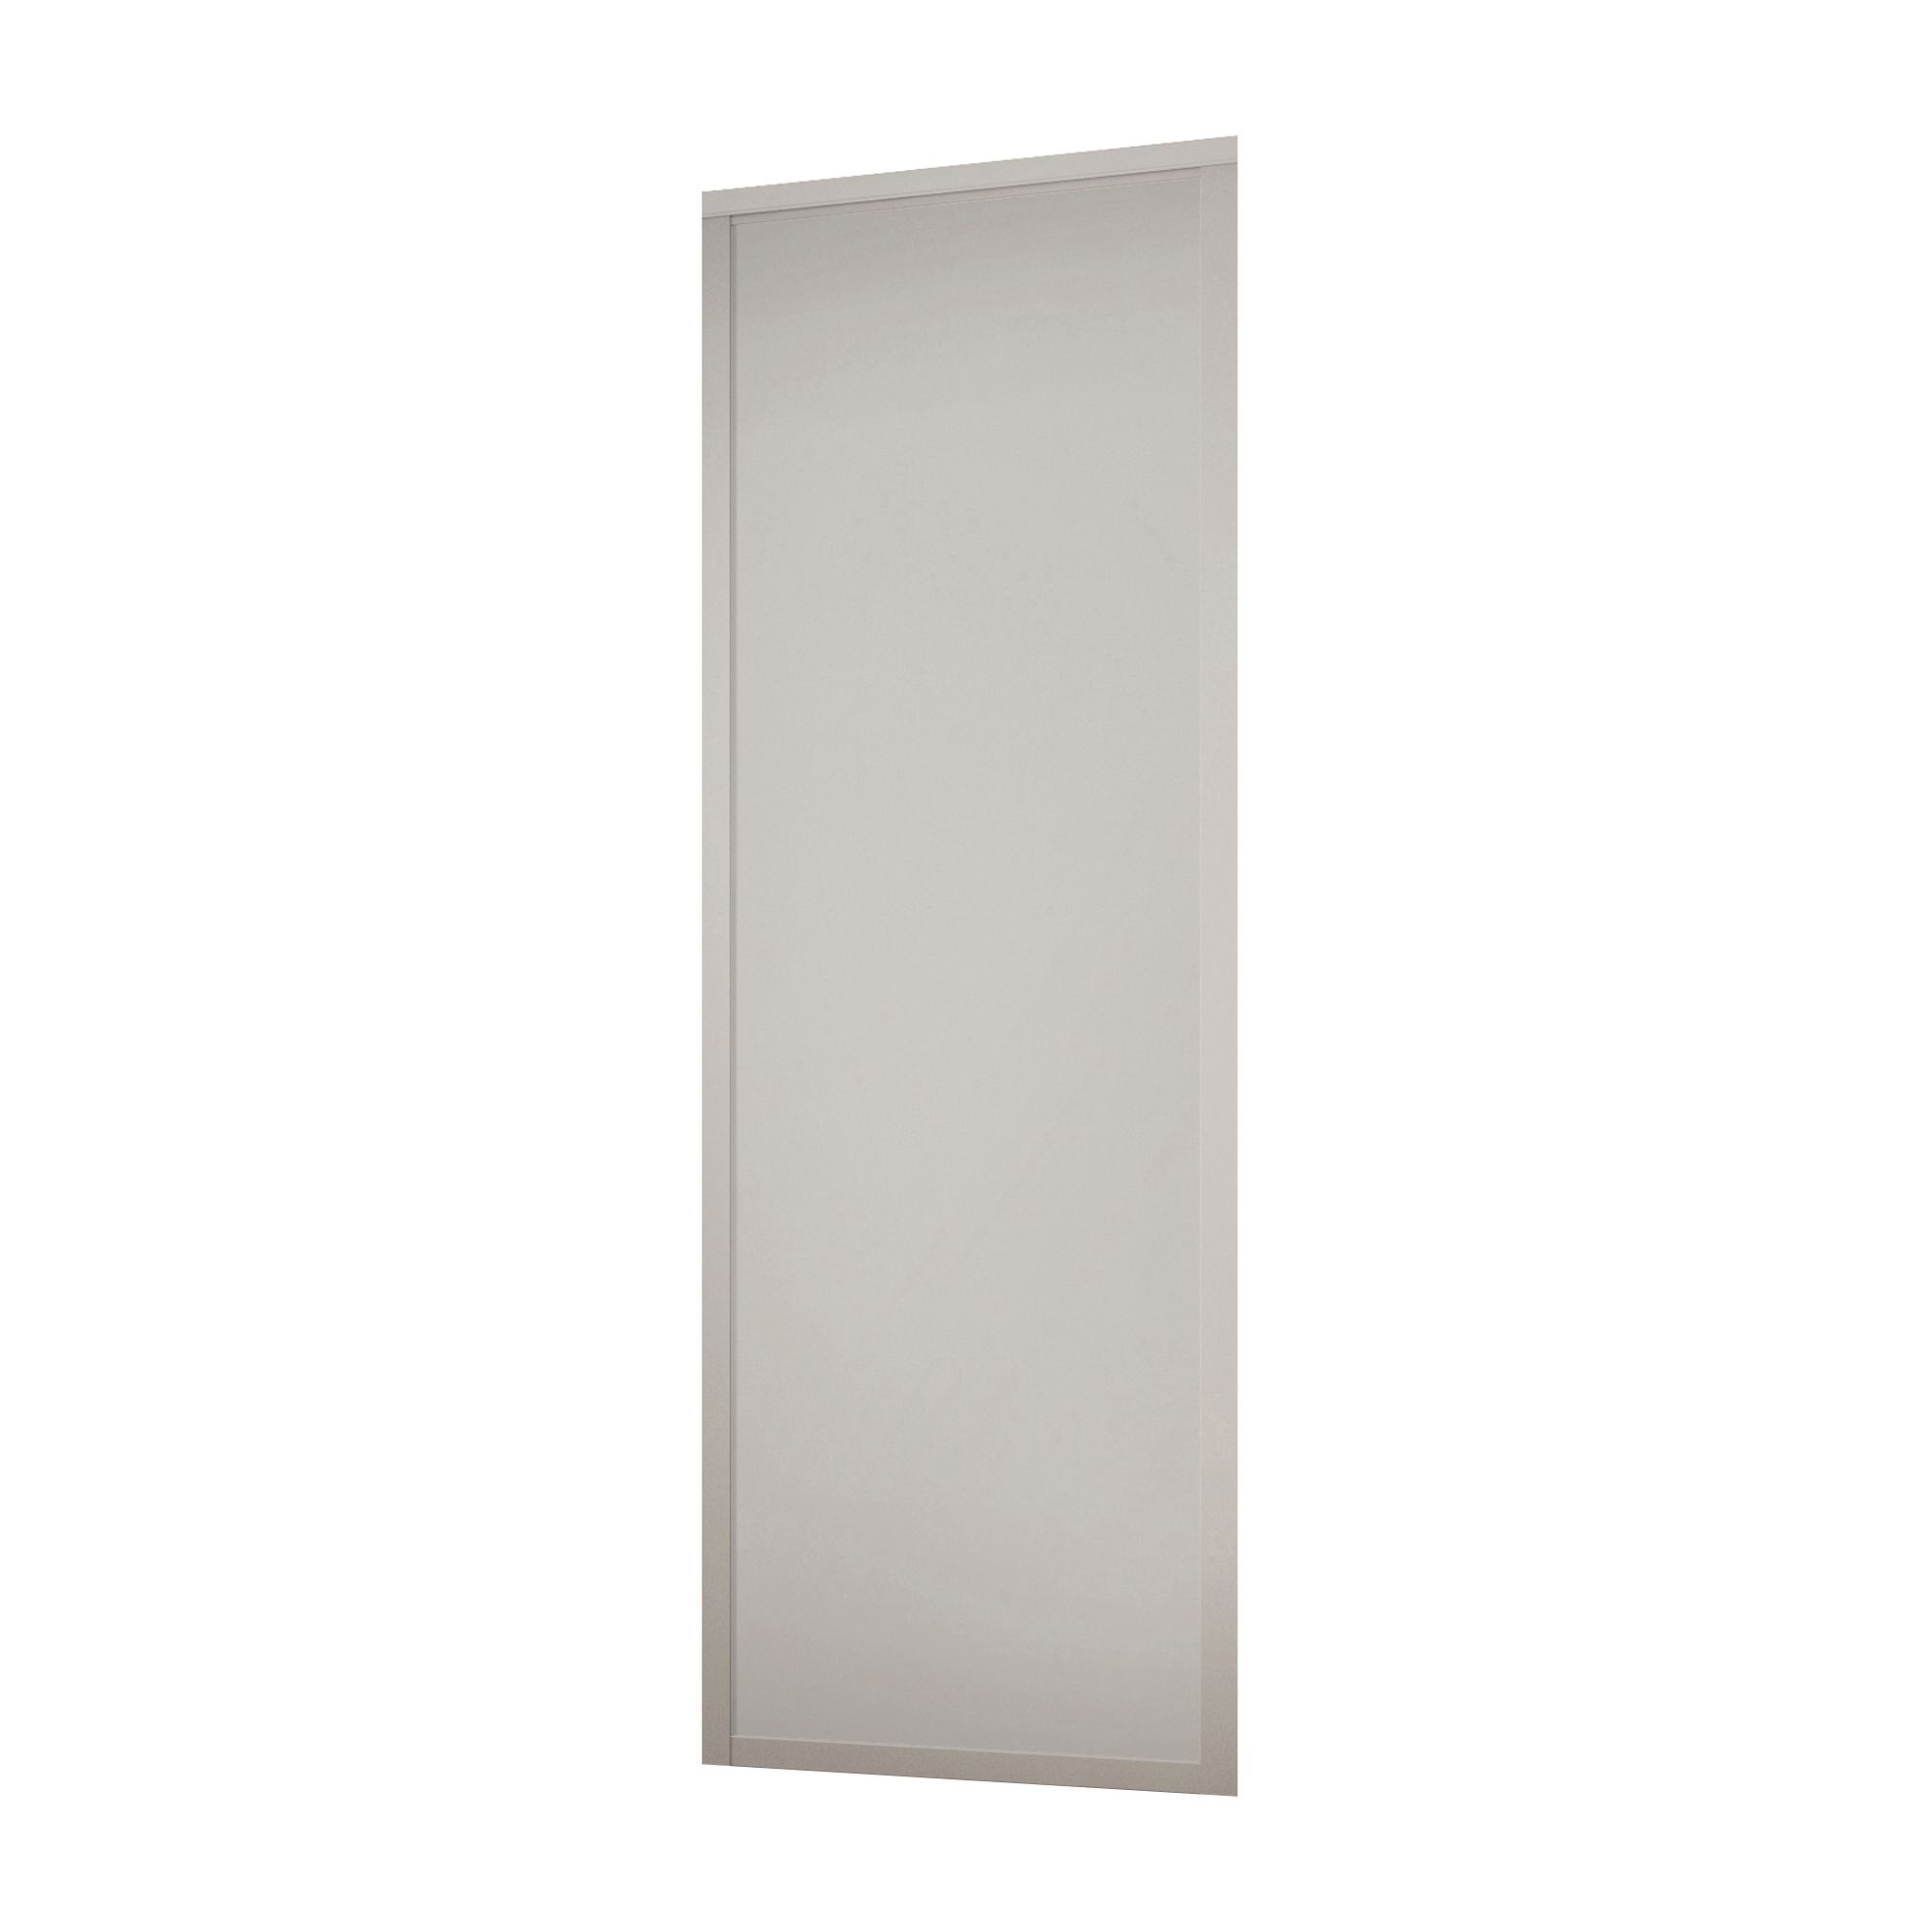 Spacepro Shaker Matt Dove grey Single panel Sliding wardrobe door (H) 2260mm x (W) 610mm